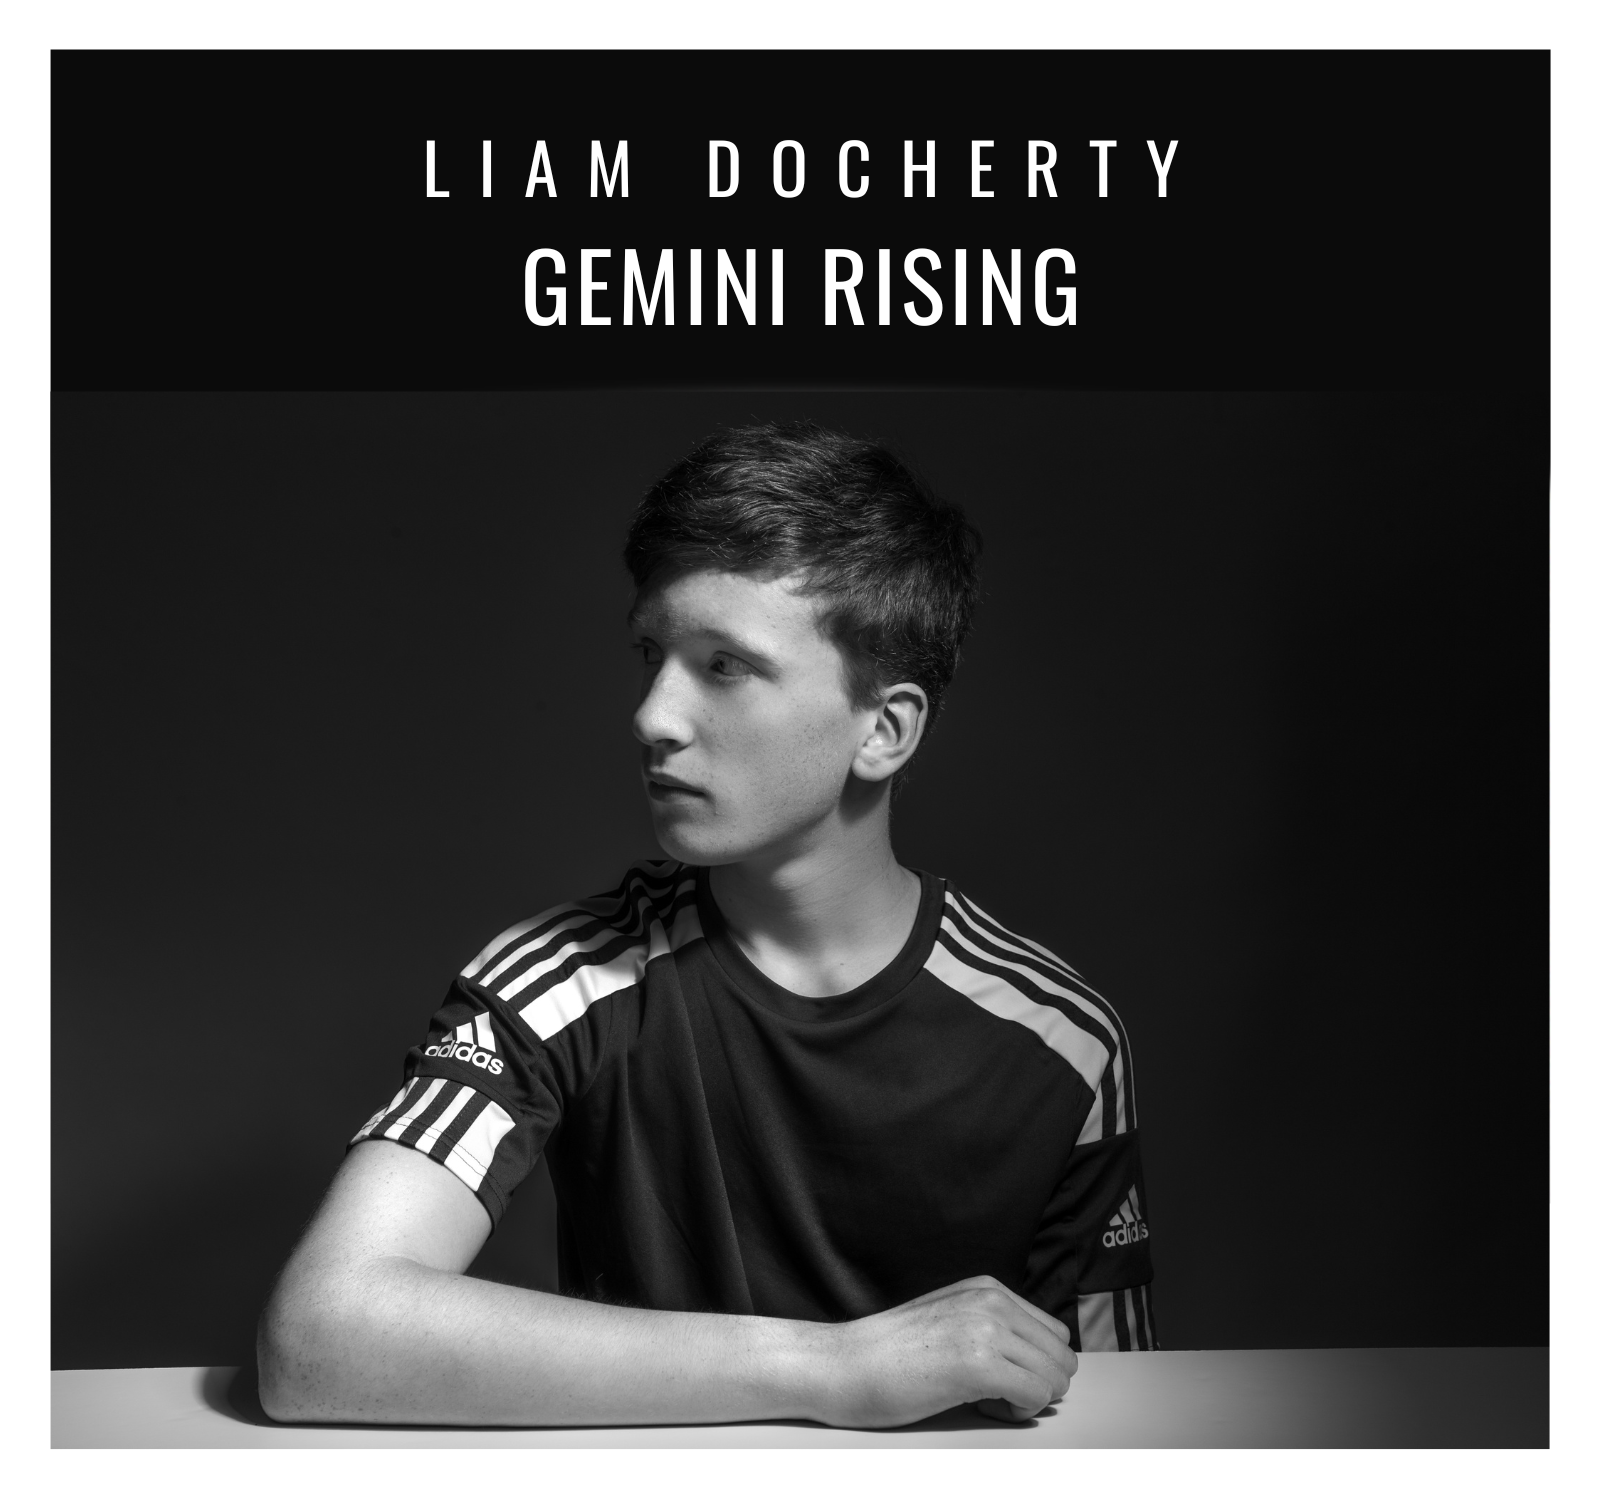 Liam Docherty “Gemini Rising” single artwork